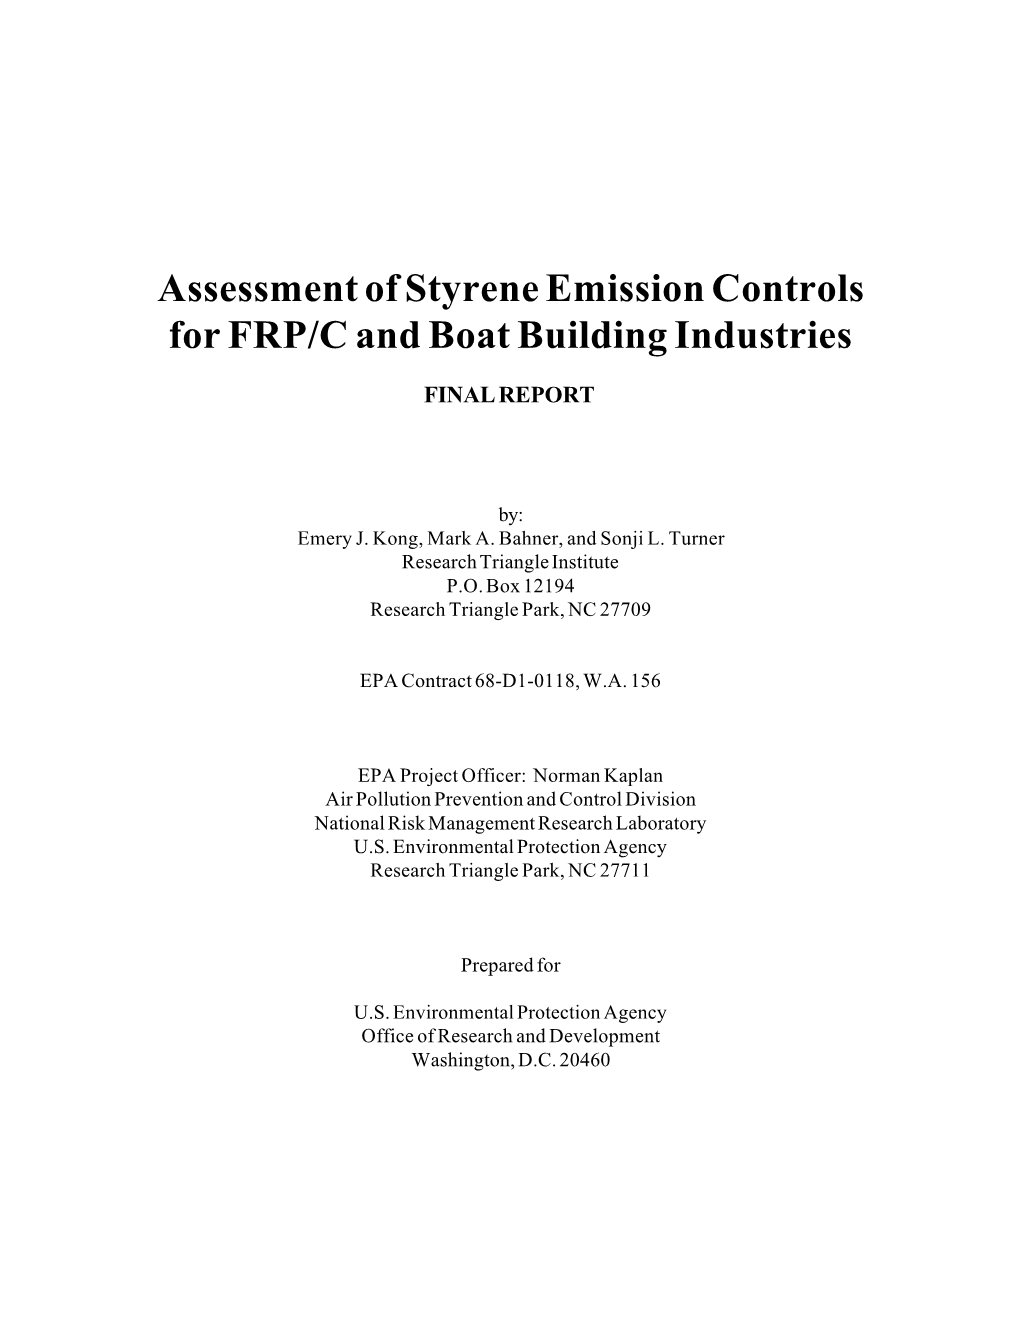 Assessment of Styrene Emission Controls for FRP/C